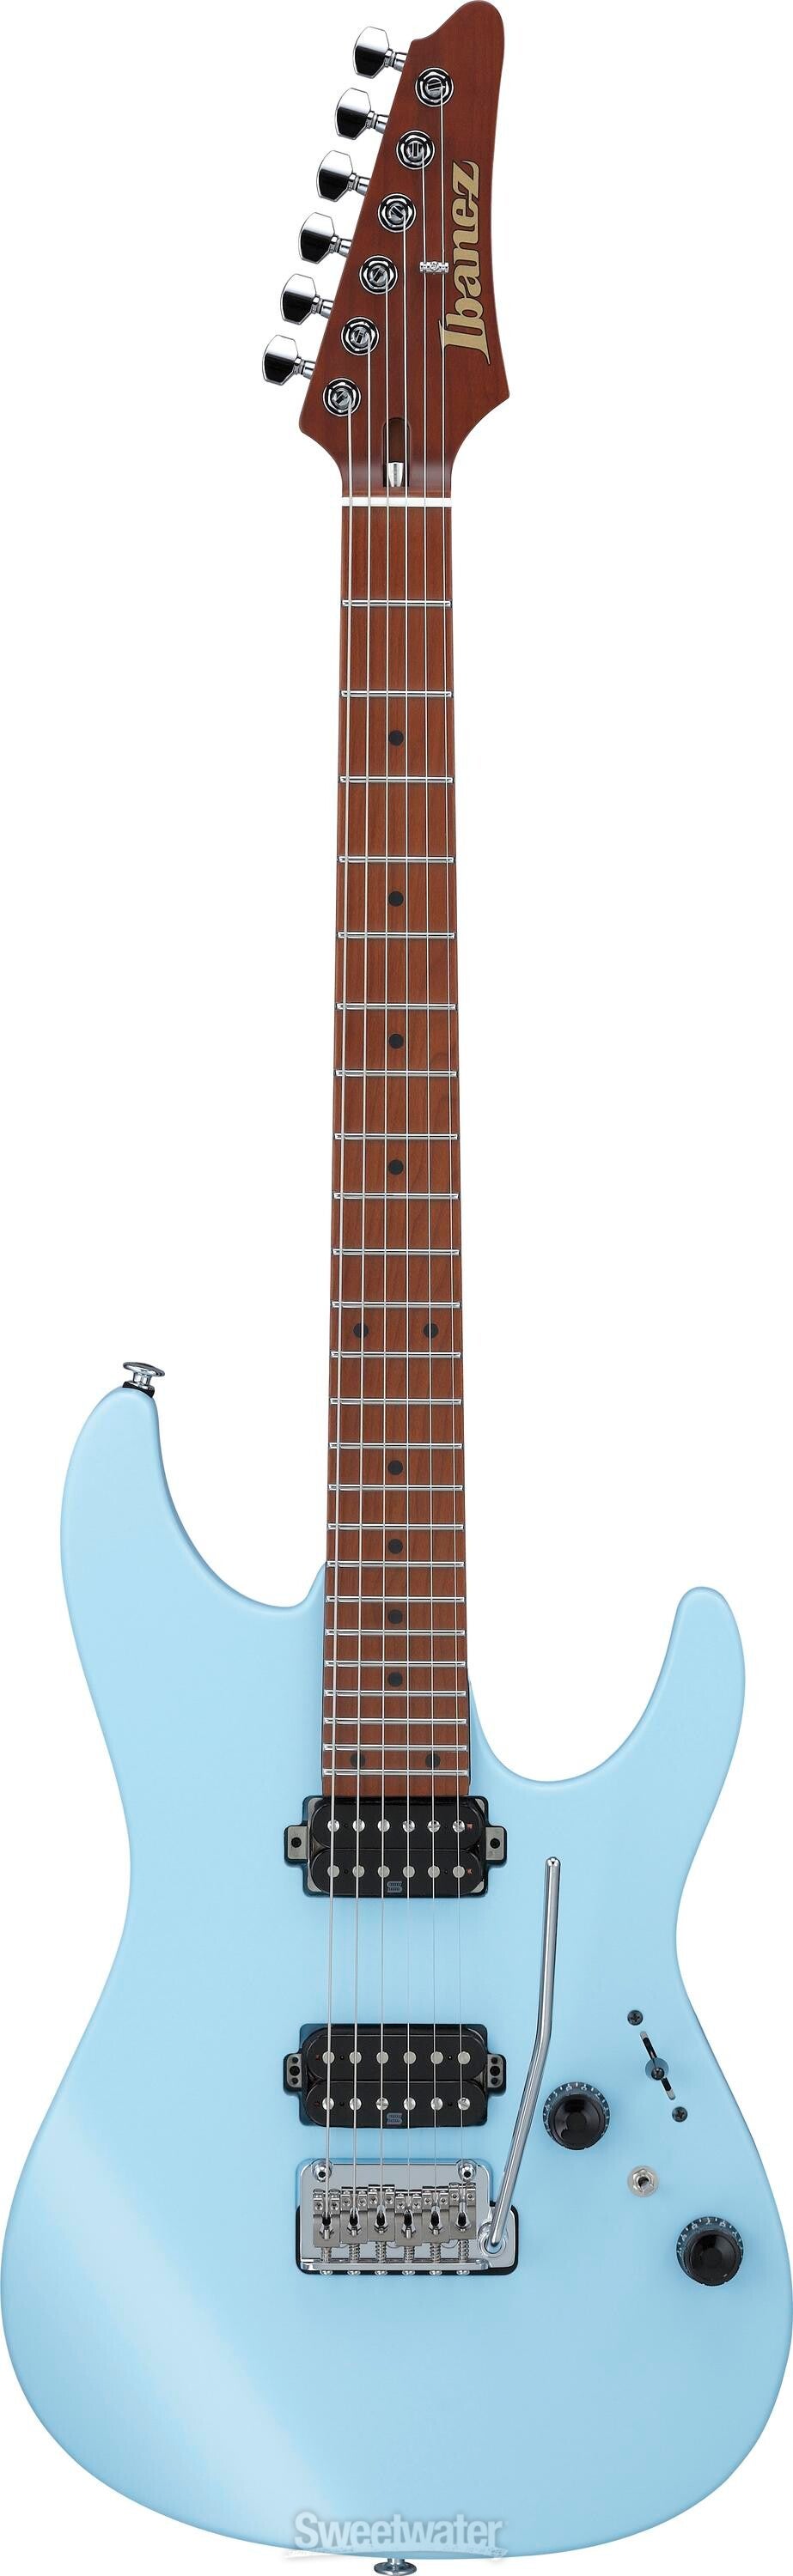 Ibanez Prestige AZ2402 Electric Guitar - Seafoam Blue Flat